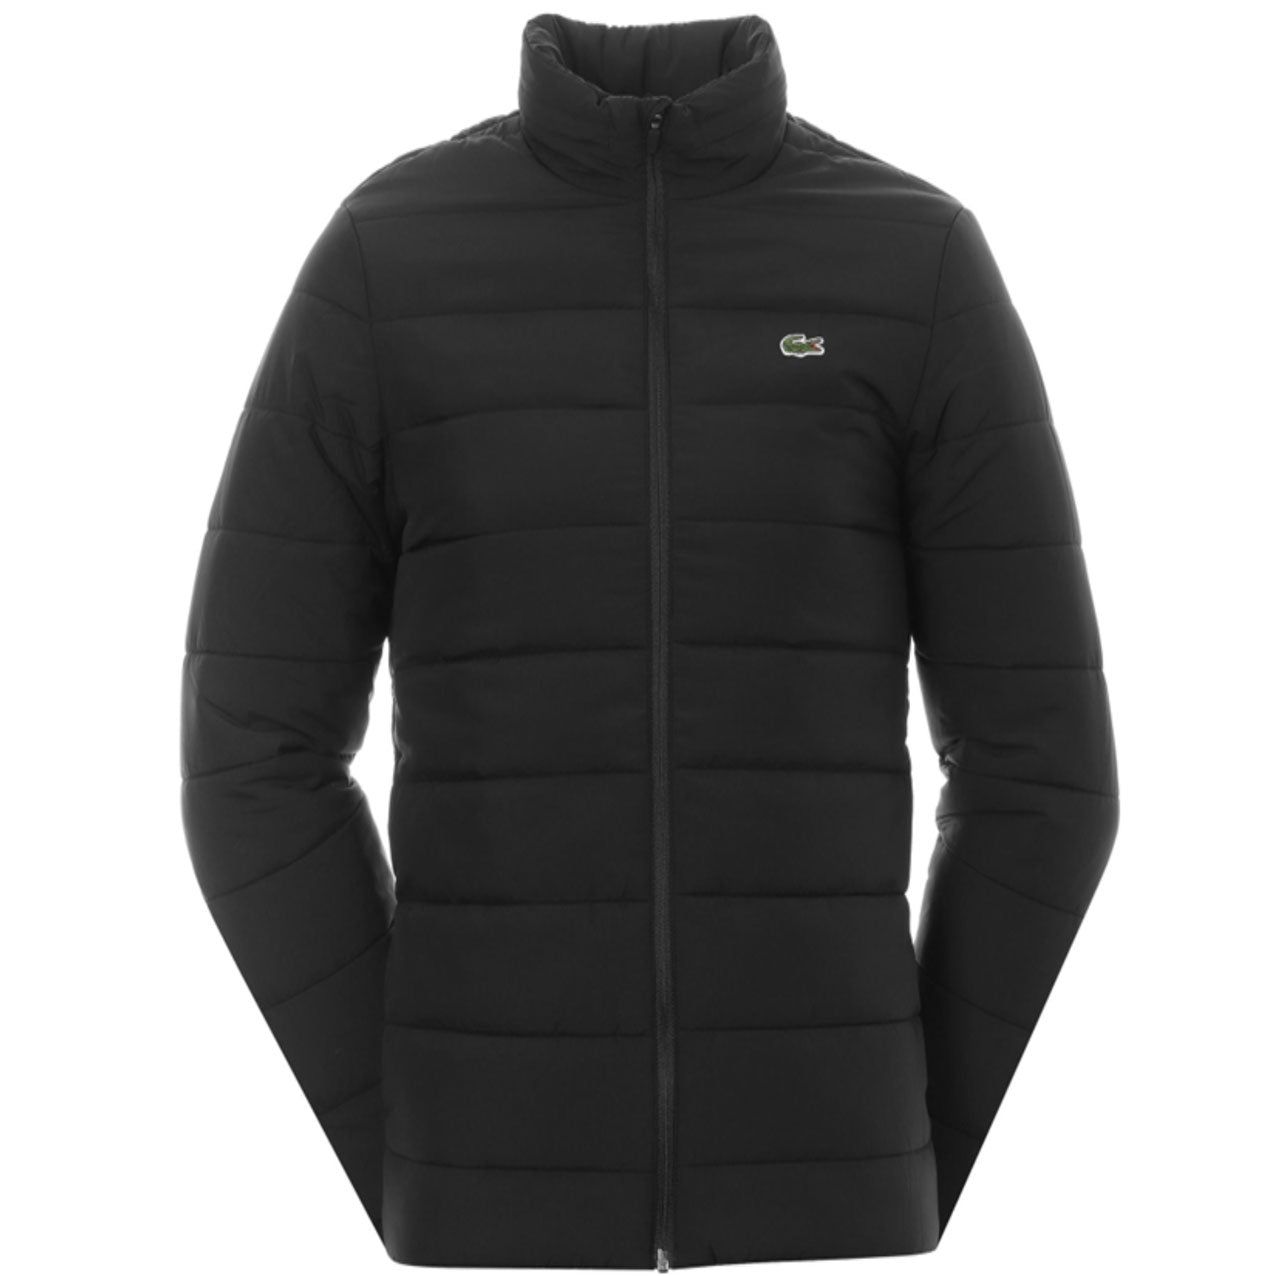 Lacoste Jacket Mens Water Resistant Black Jacket Full Sleeve Logo Jacket - MRGOUTLETS